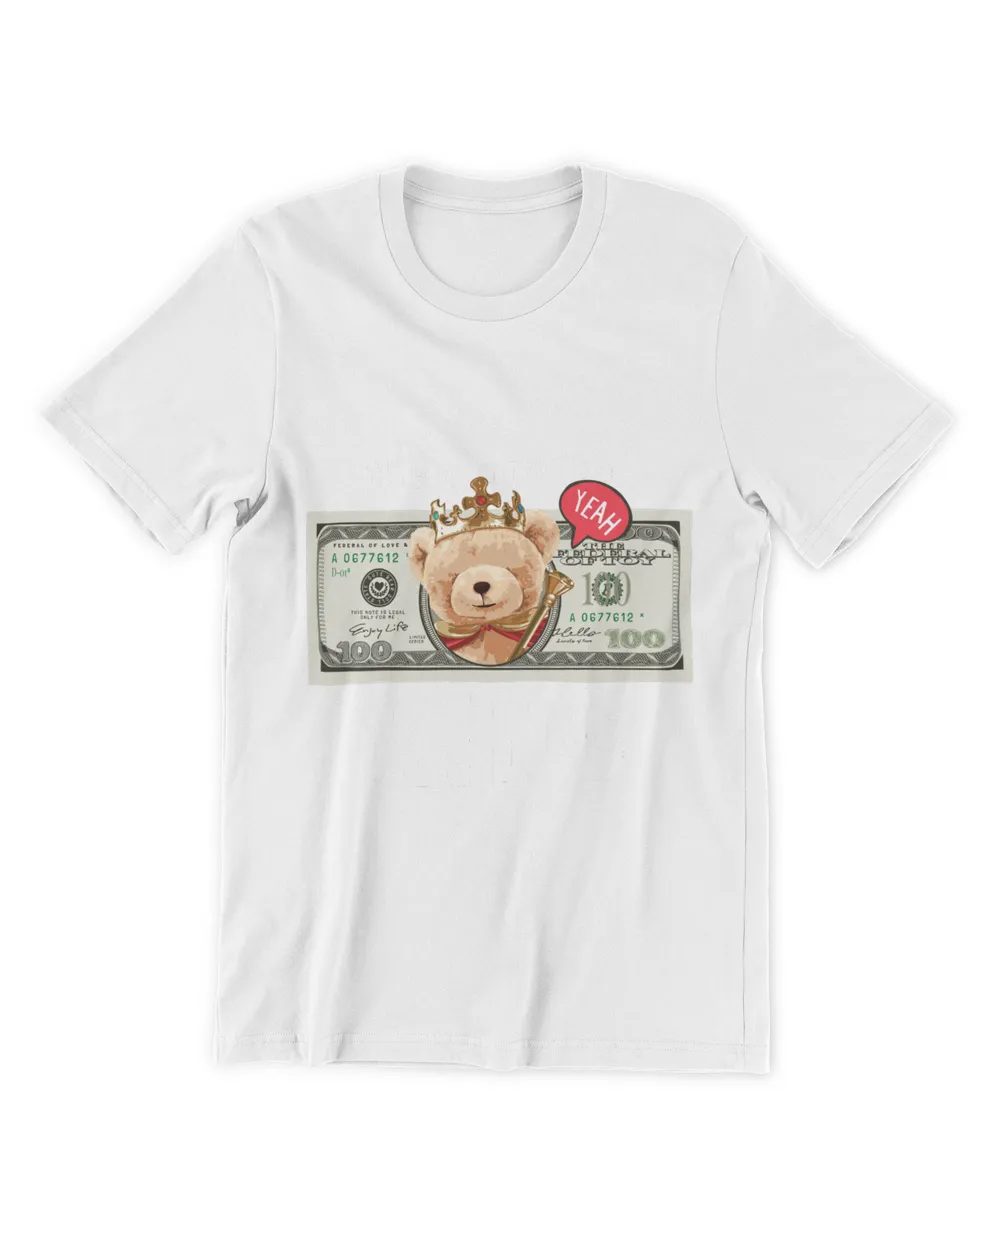 The wannabe KING - Money Art T-shirt Maxu